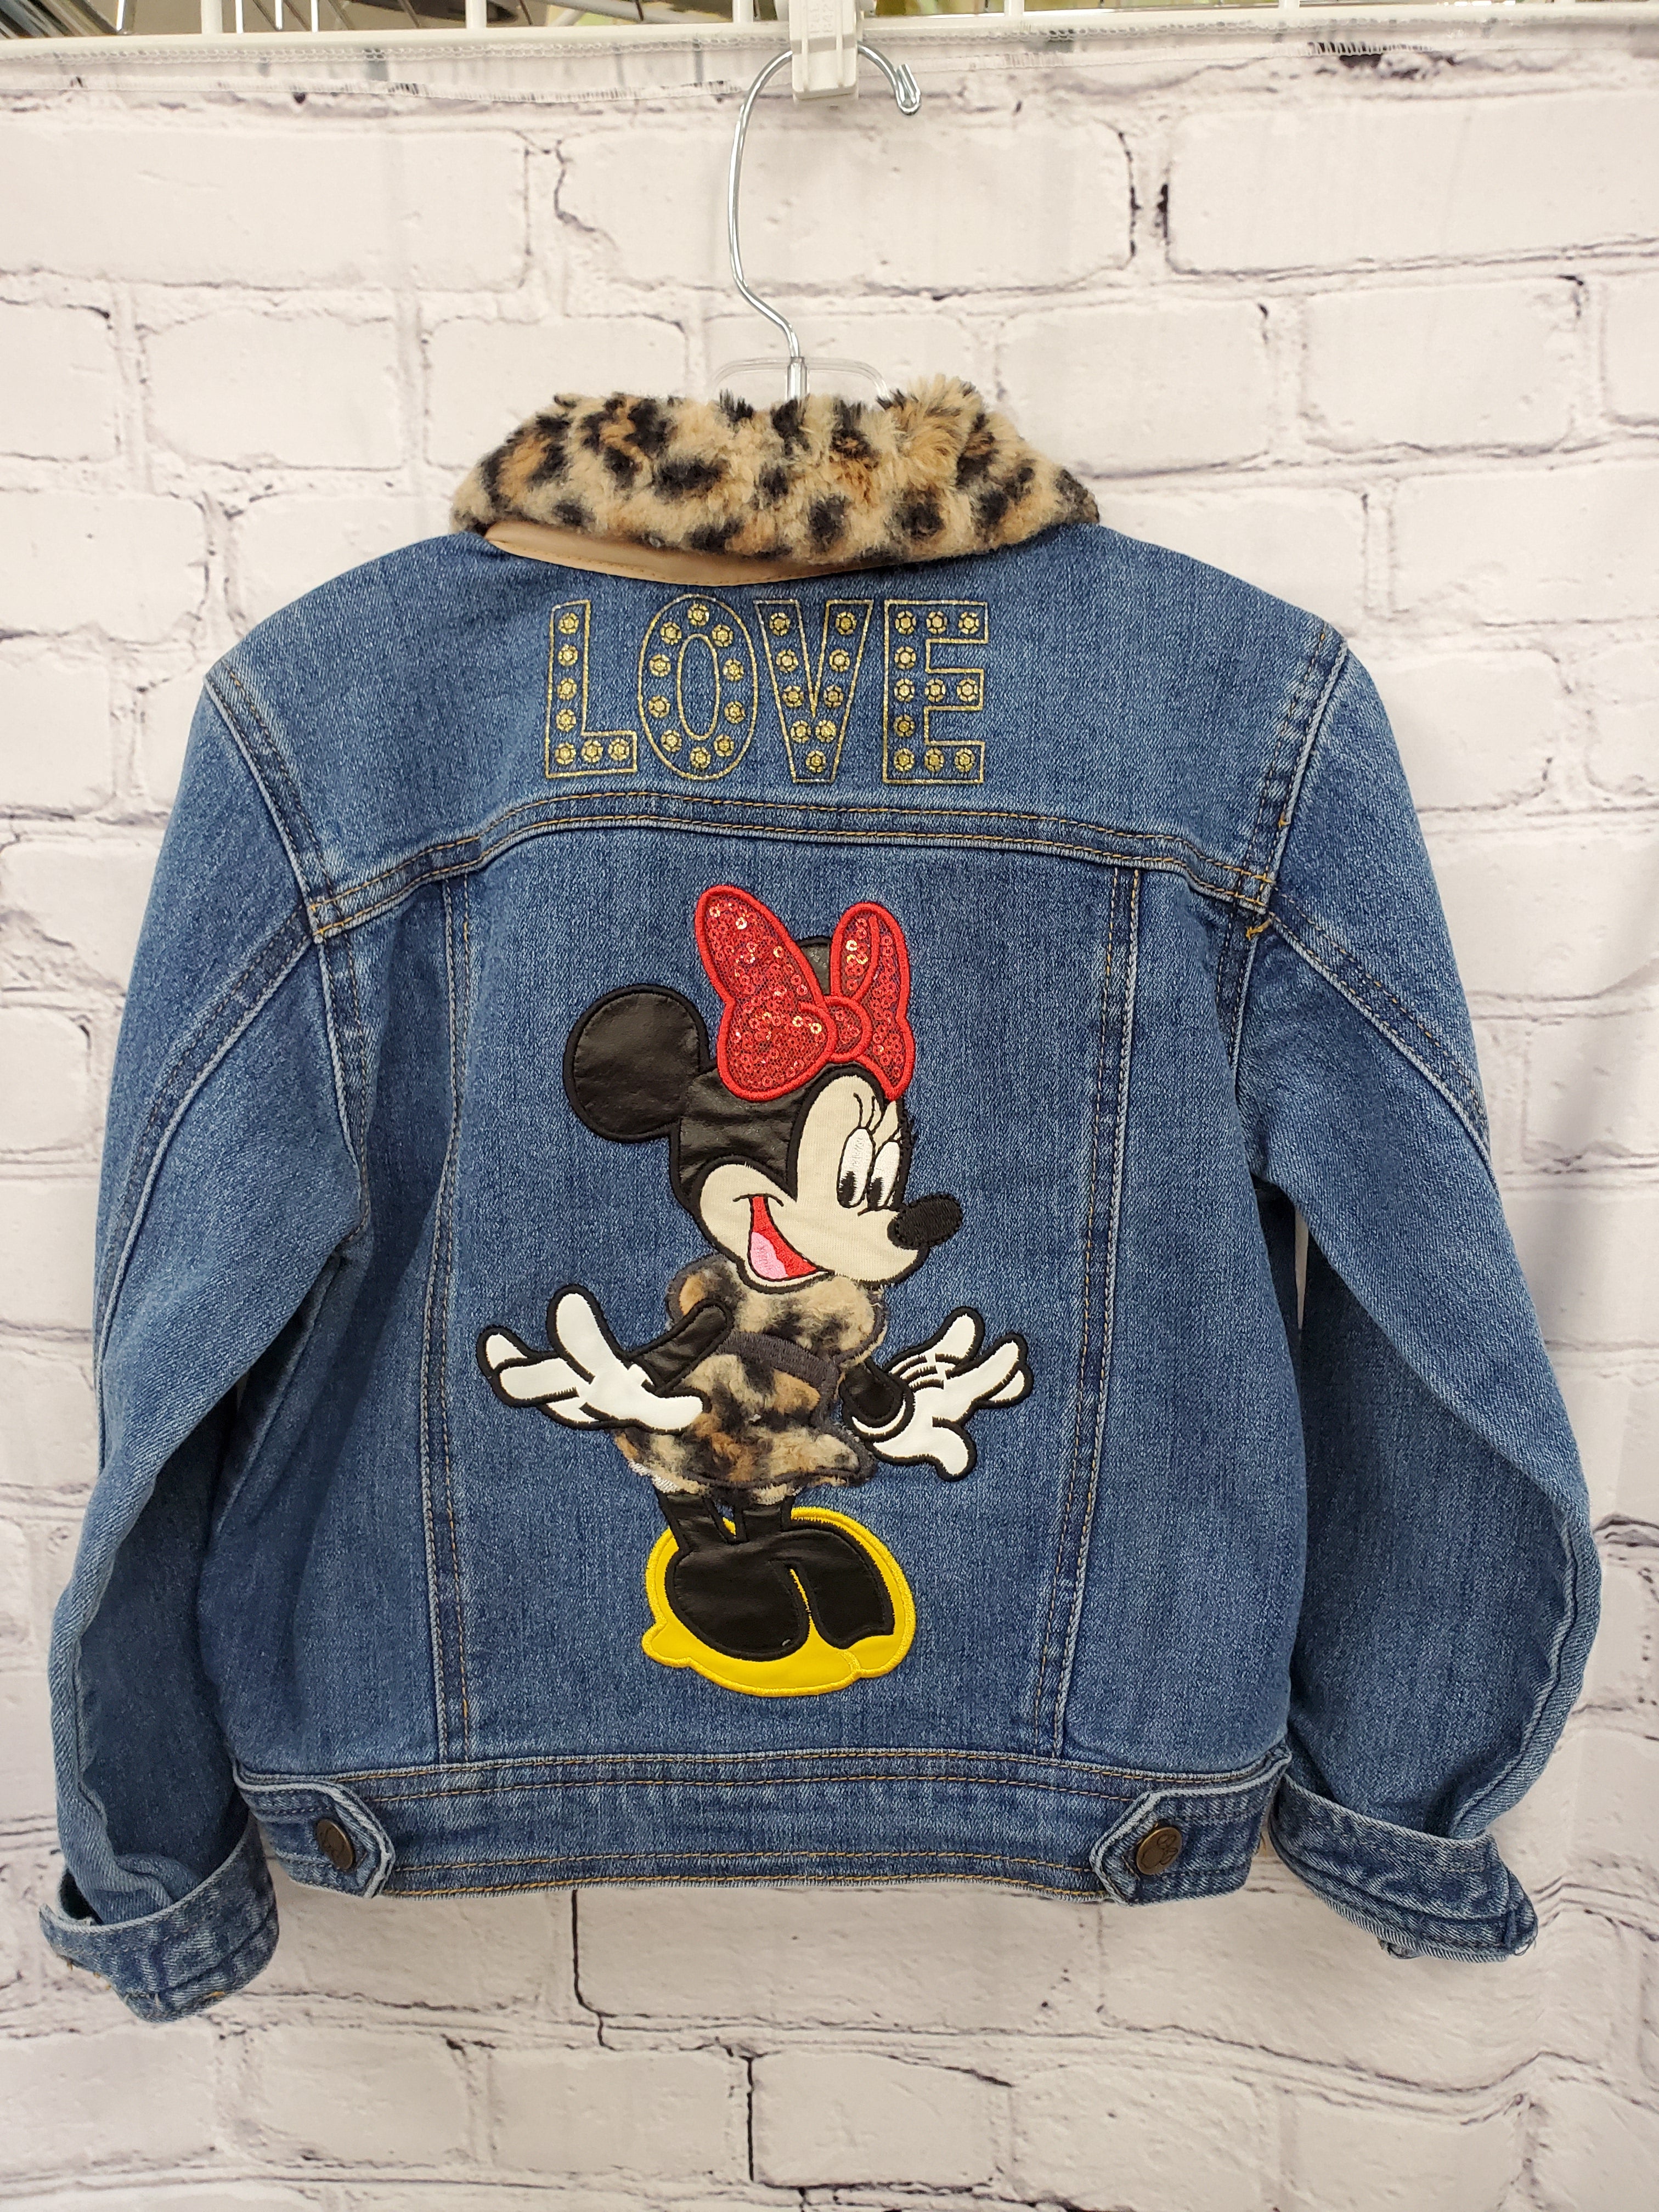 Disney Jr. Minnie girls jacket denim blue 5/6